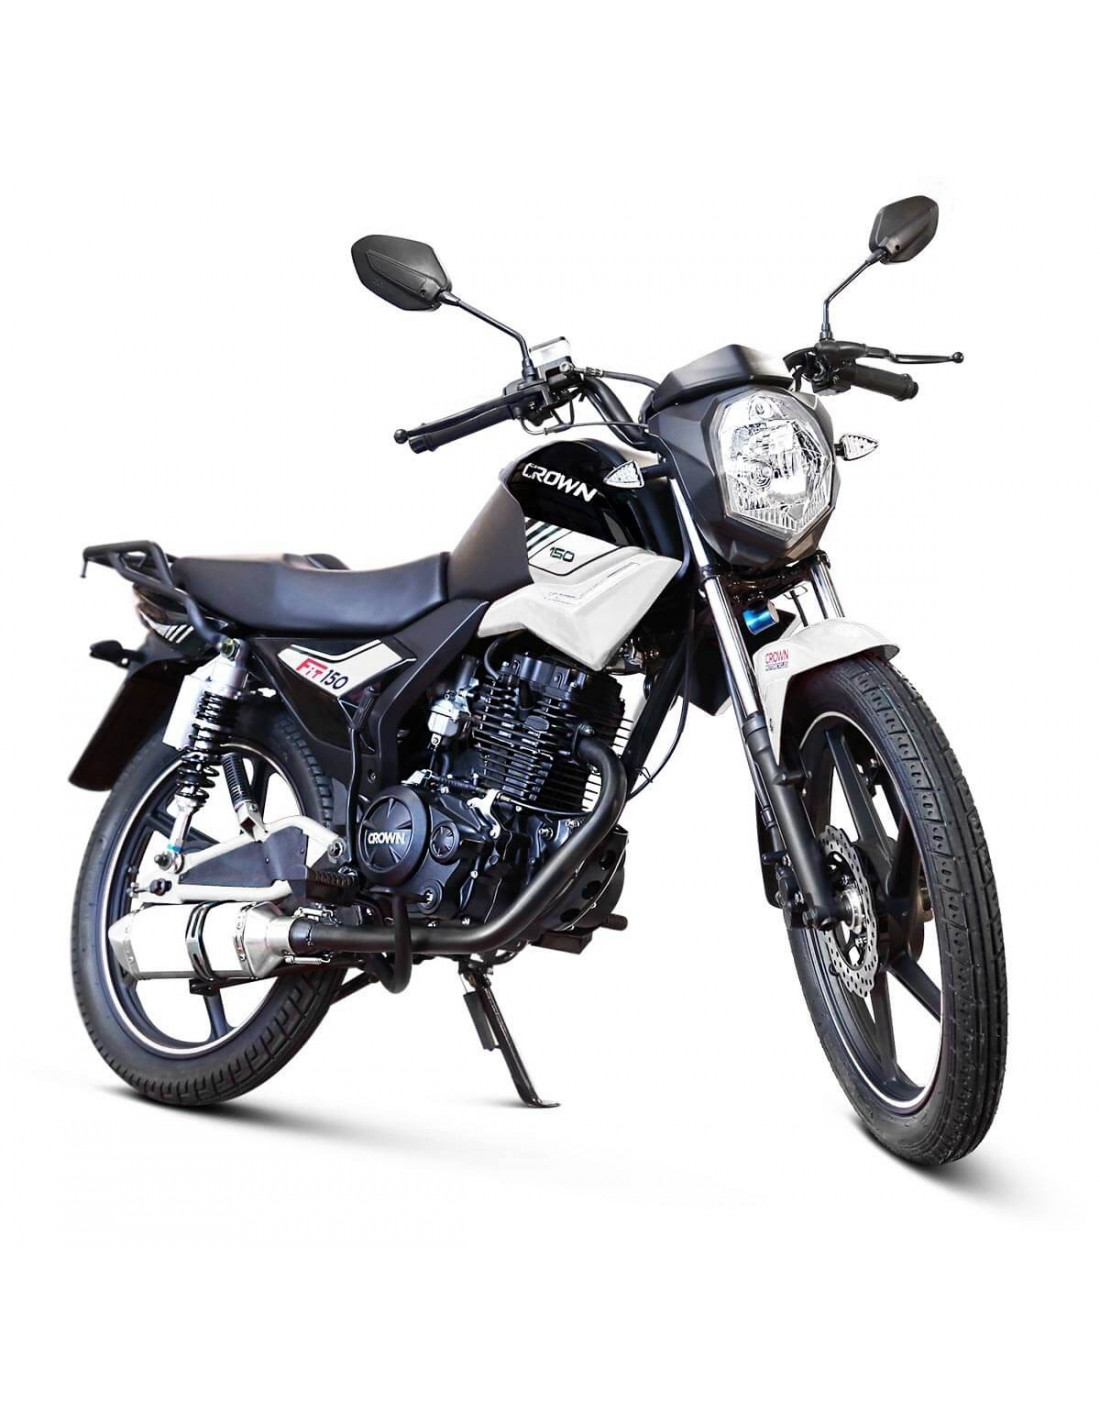 Honda 150cc Motorcycle Price In Pakistan لم يسبق له مثيل الصور